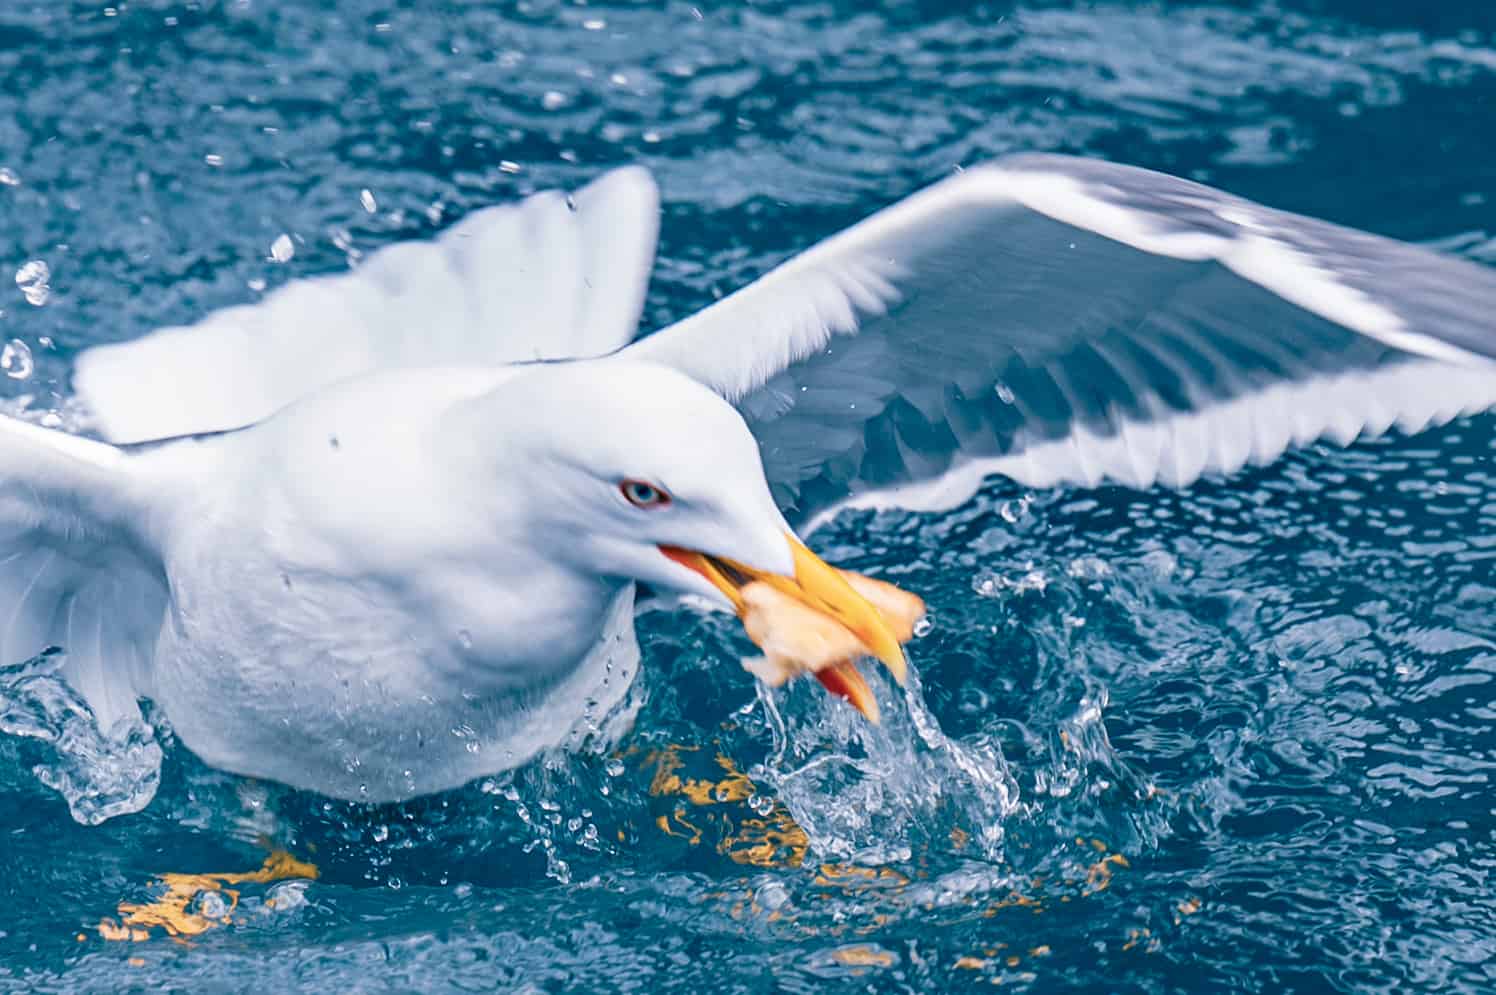 Seagull feast